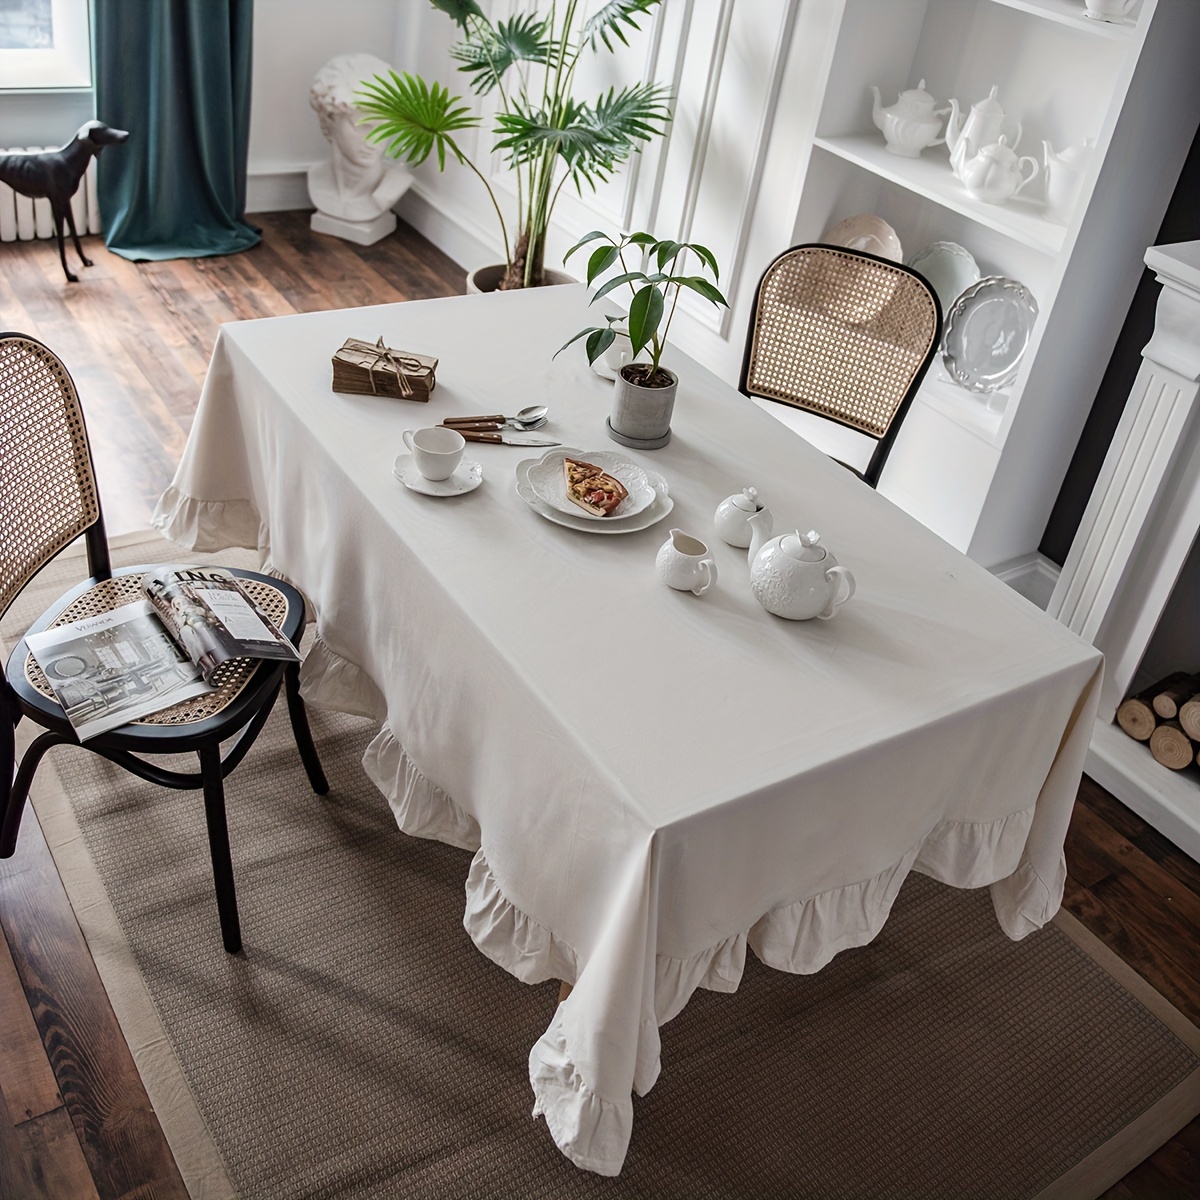 Kadut Mantel cuadrado blanco de 70 x 70 pulgadas para mesa cuadrada o  redonda, resistente, mantel lavable para fiestas, bodas, cocina,  restaurante